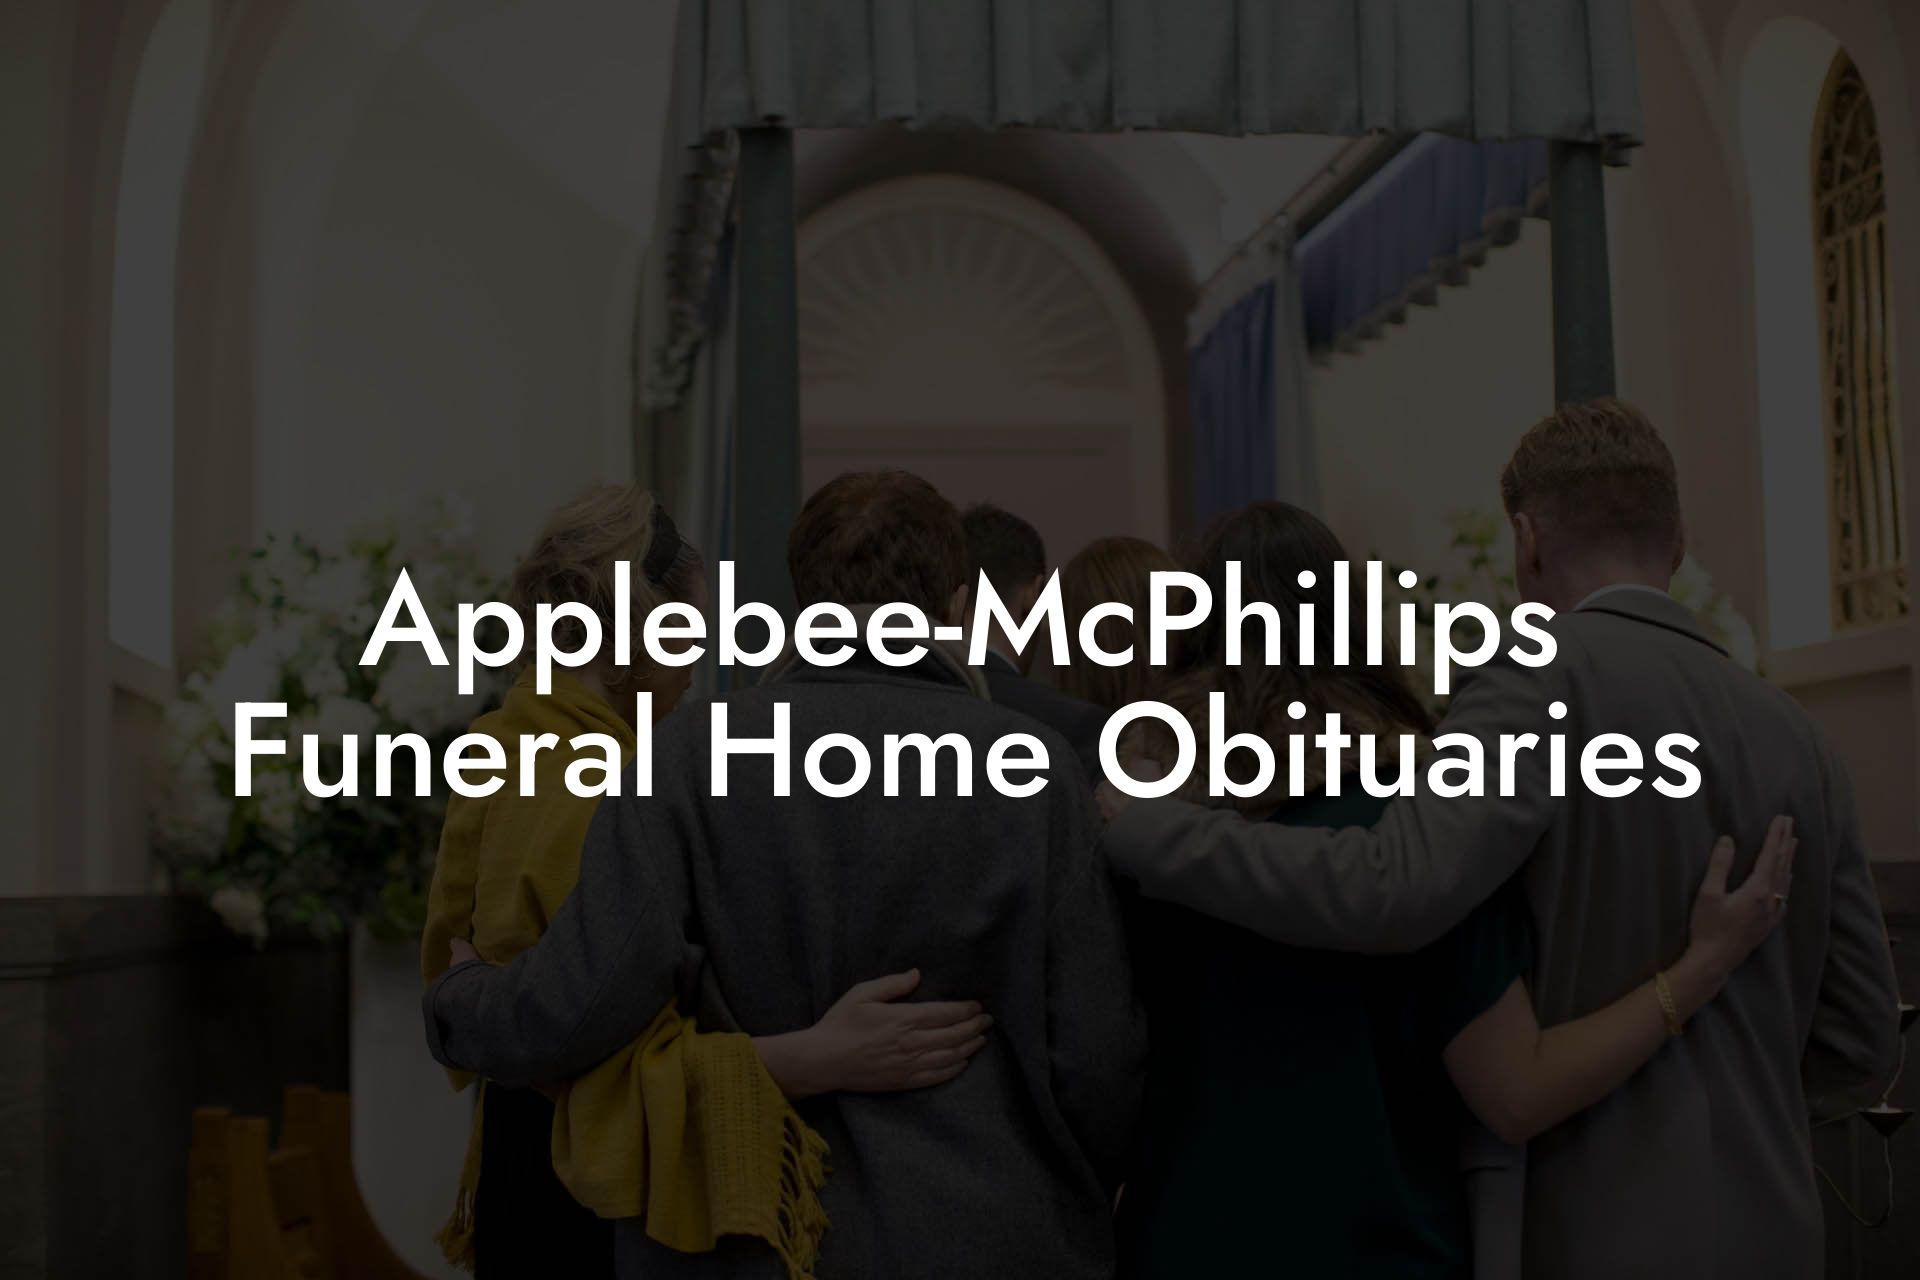 Applebee-McPhillips Funeral Home Obituaries